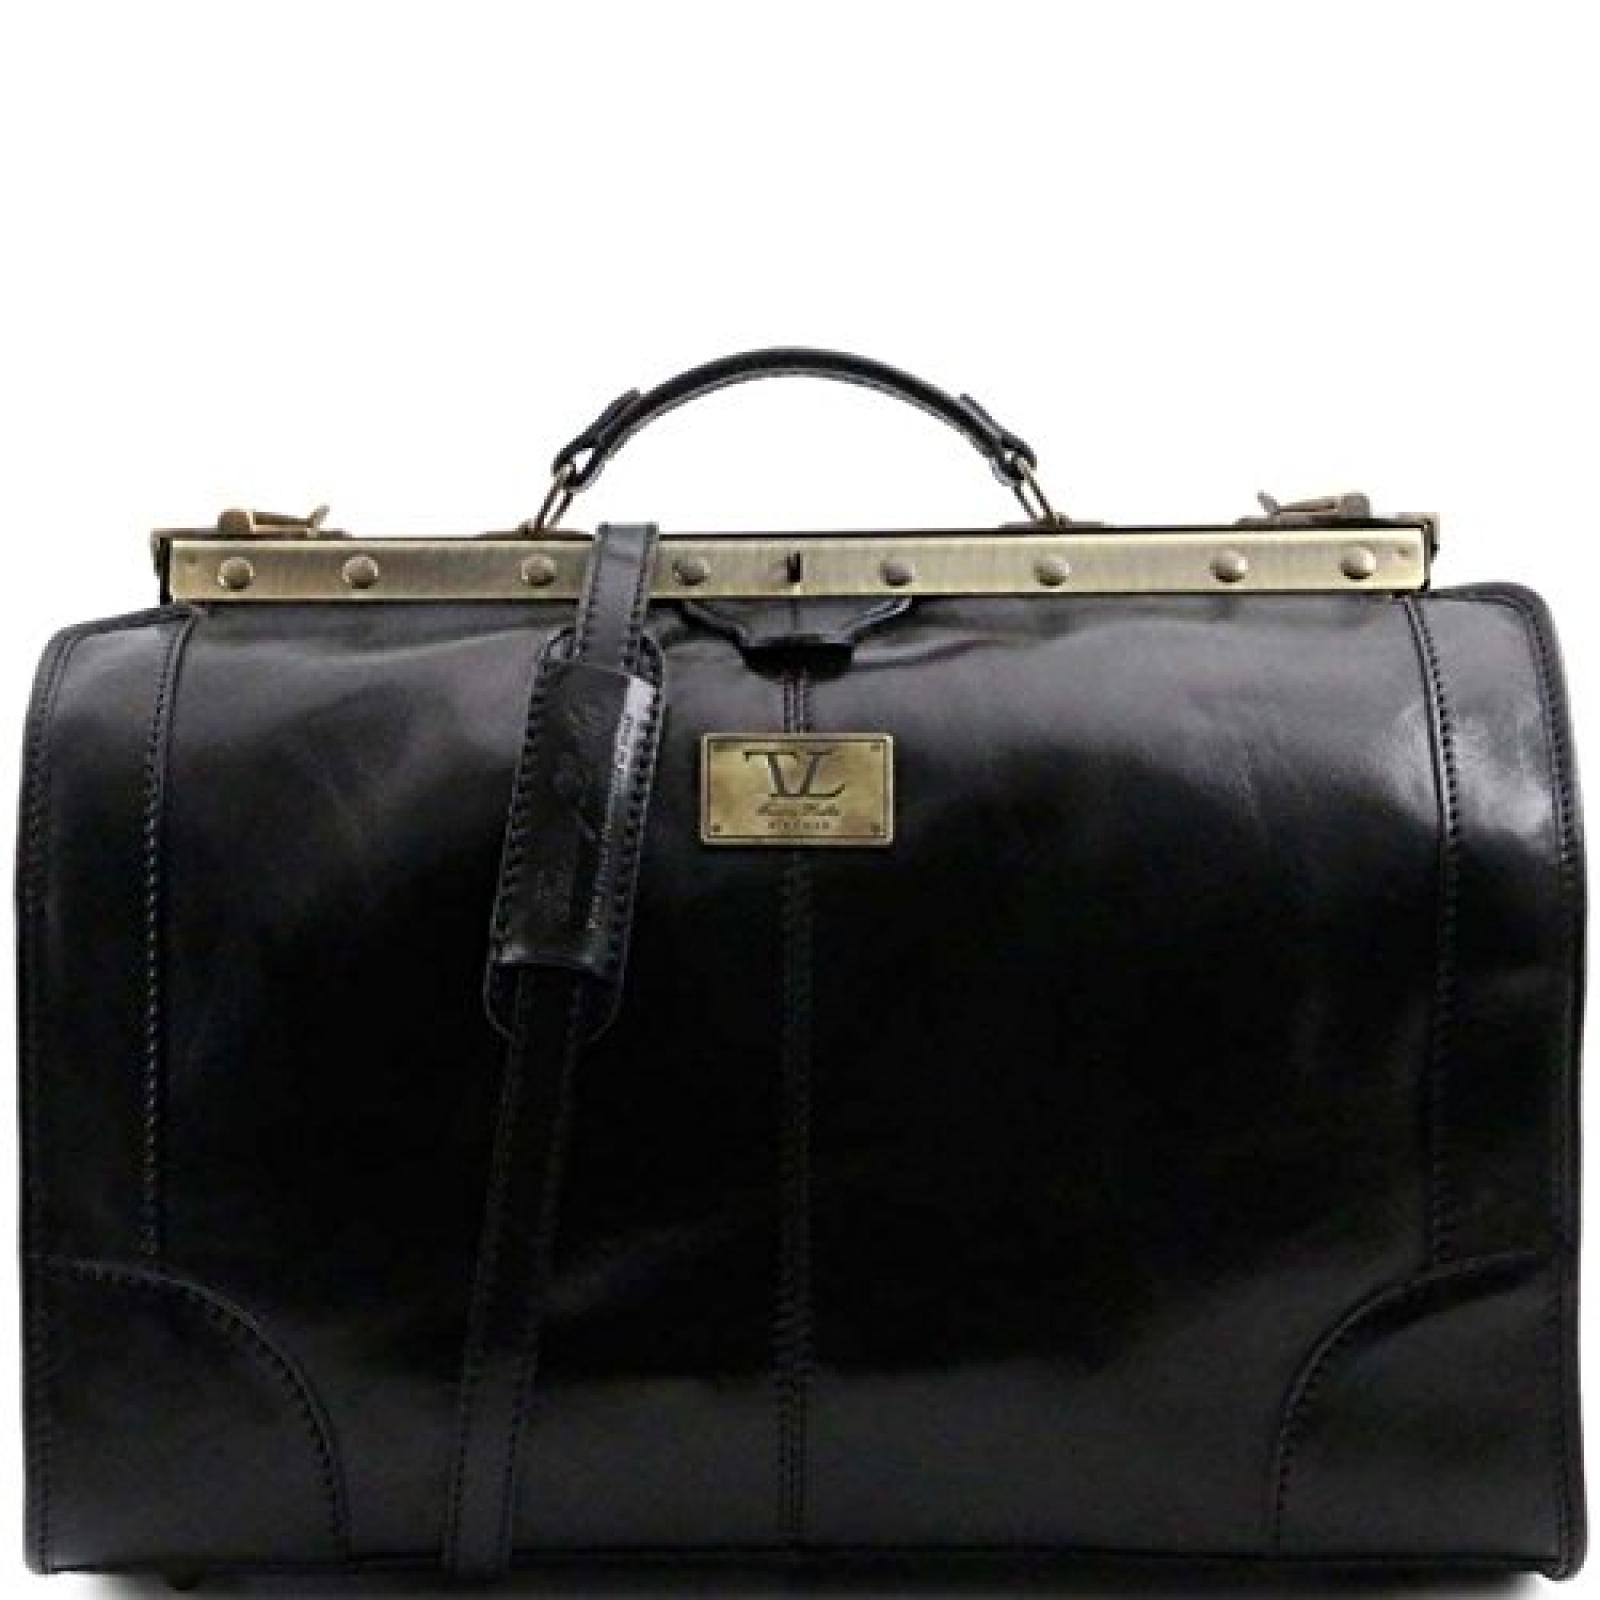 Tuscany Leather - Madrid - Maulbügelreisetasche aus Leder - Klein Schwarz - TL1023/2 